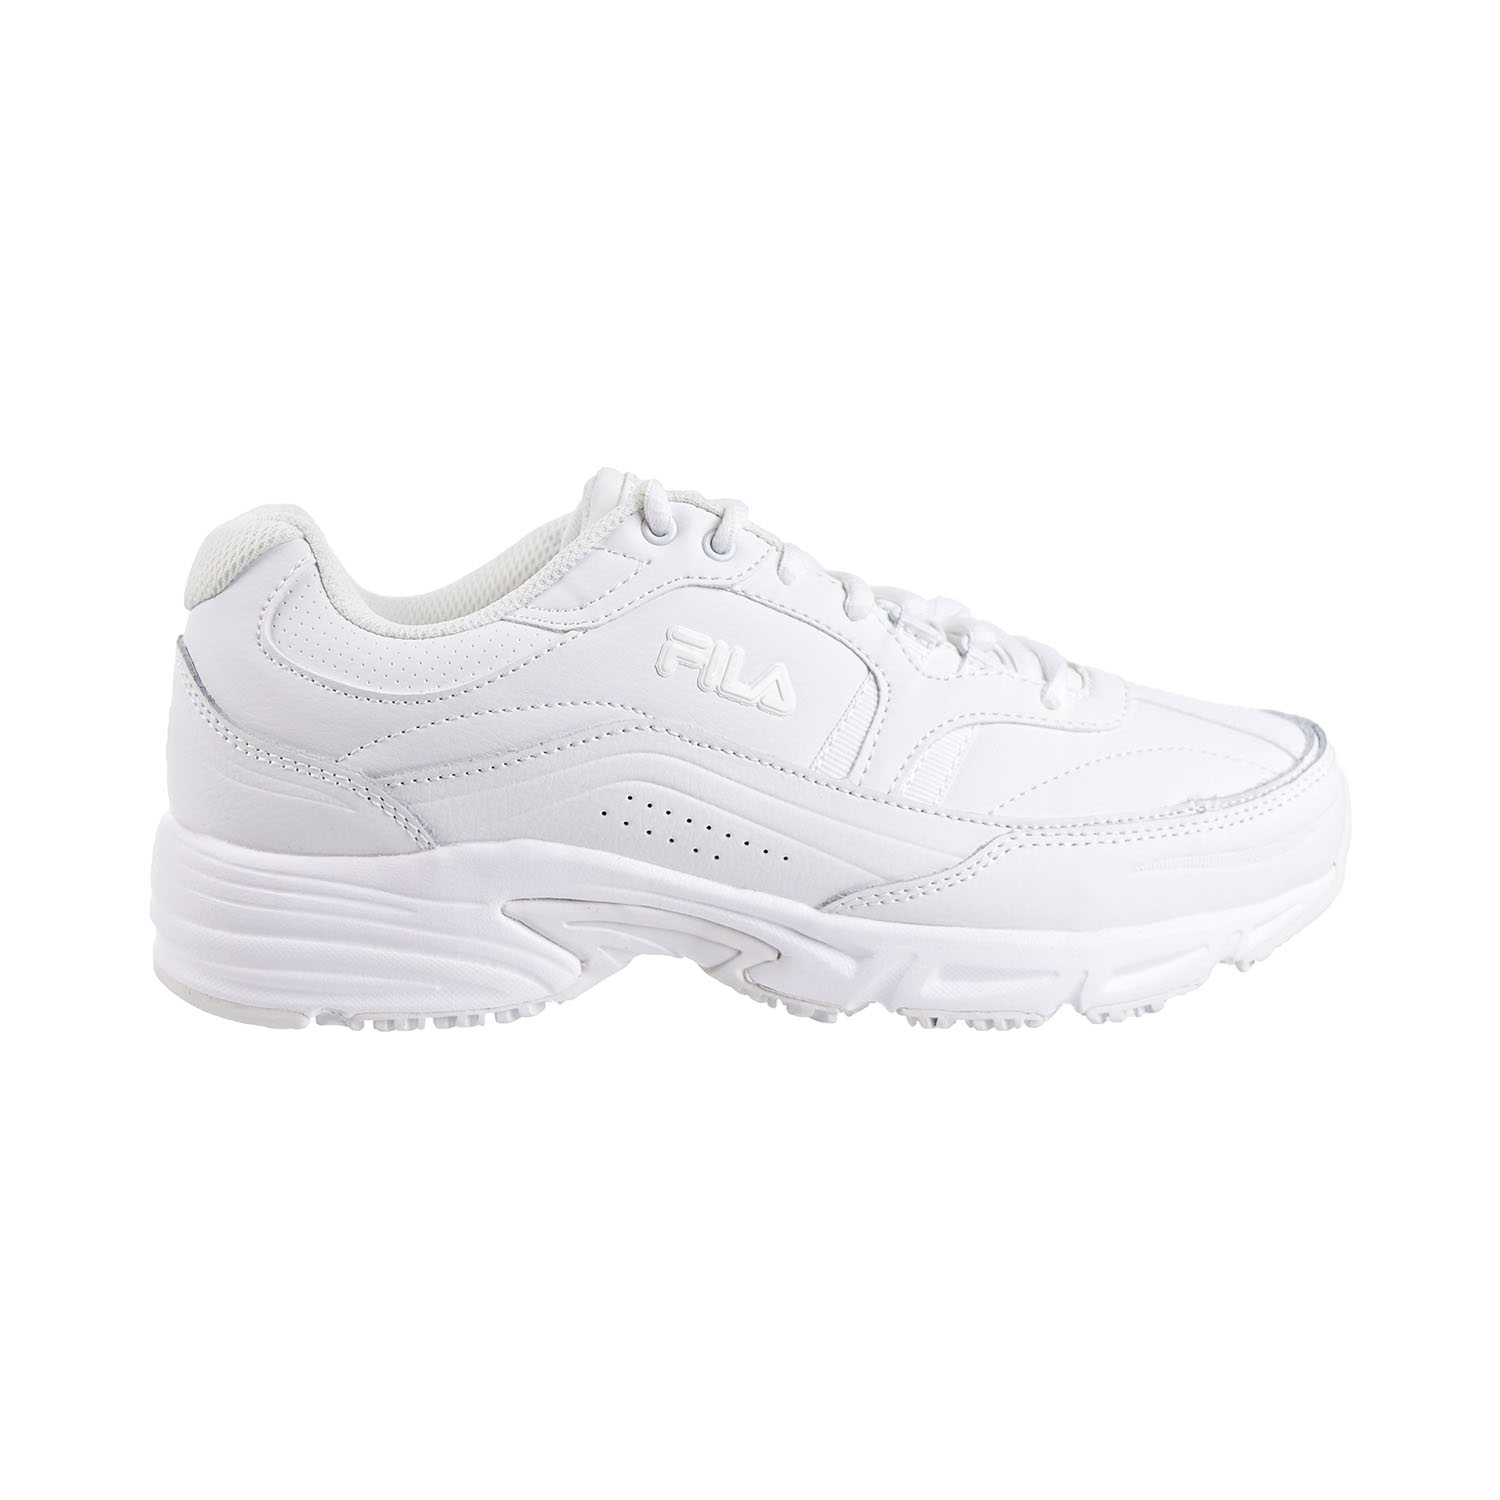 Adidas Fila Memory Workshift Slip Resistant (Extra Wide 4E) Men's Shoes White 1sgw0002-100-4e